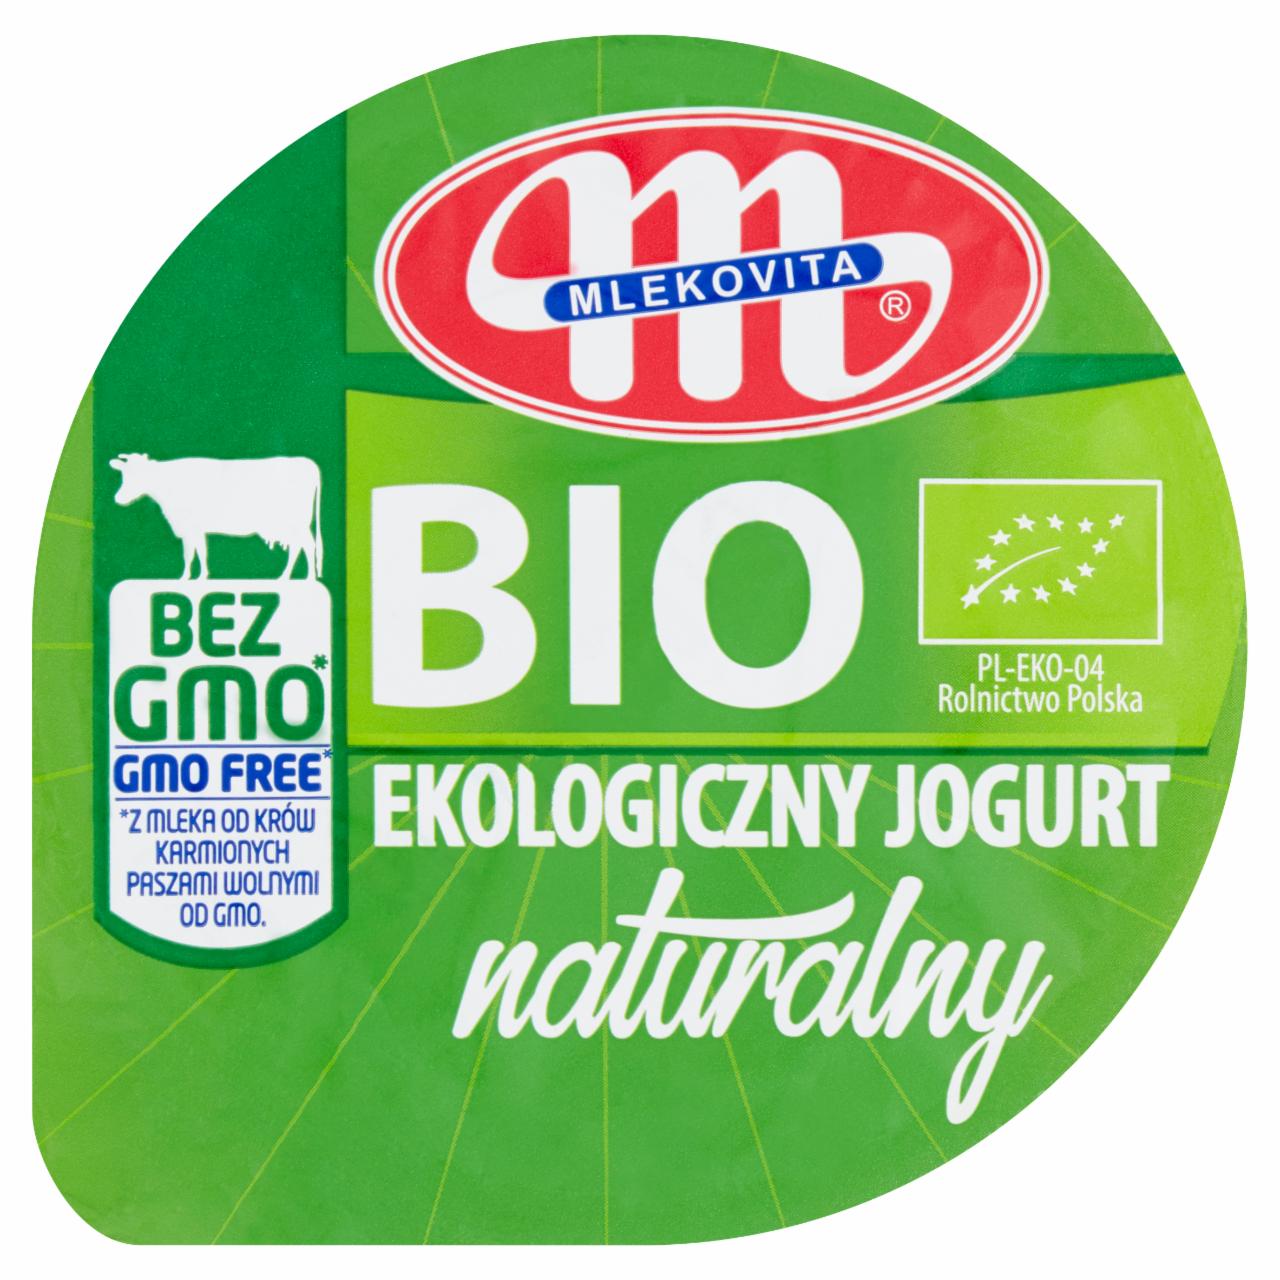 Photo - Mlekovita BIO Natural Ecological Yoghurt 200 g